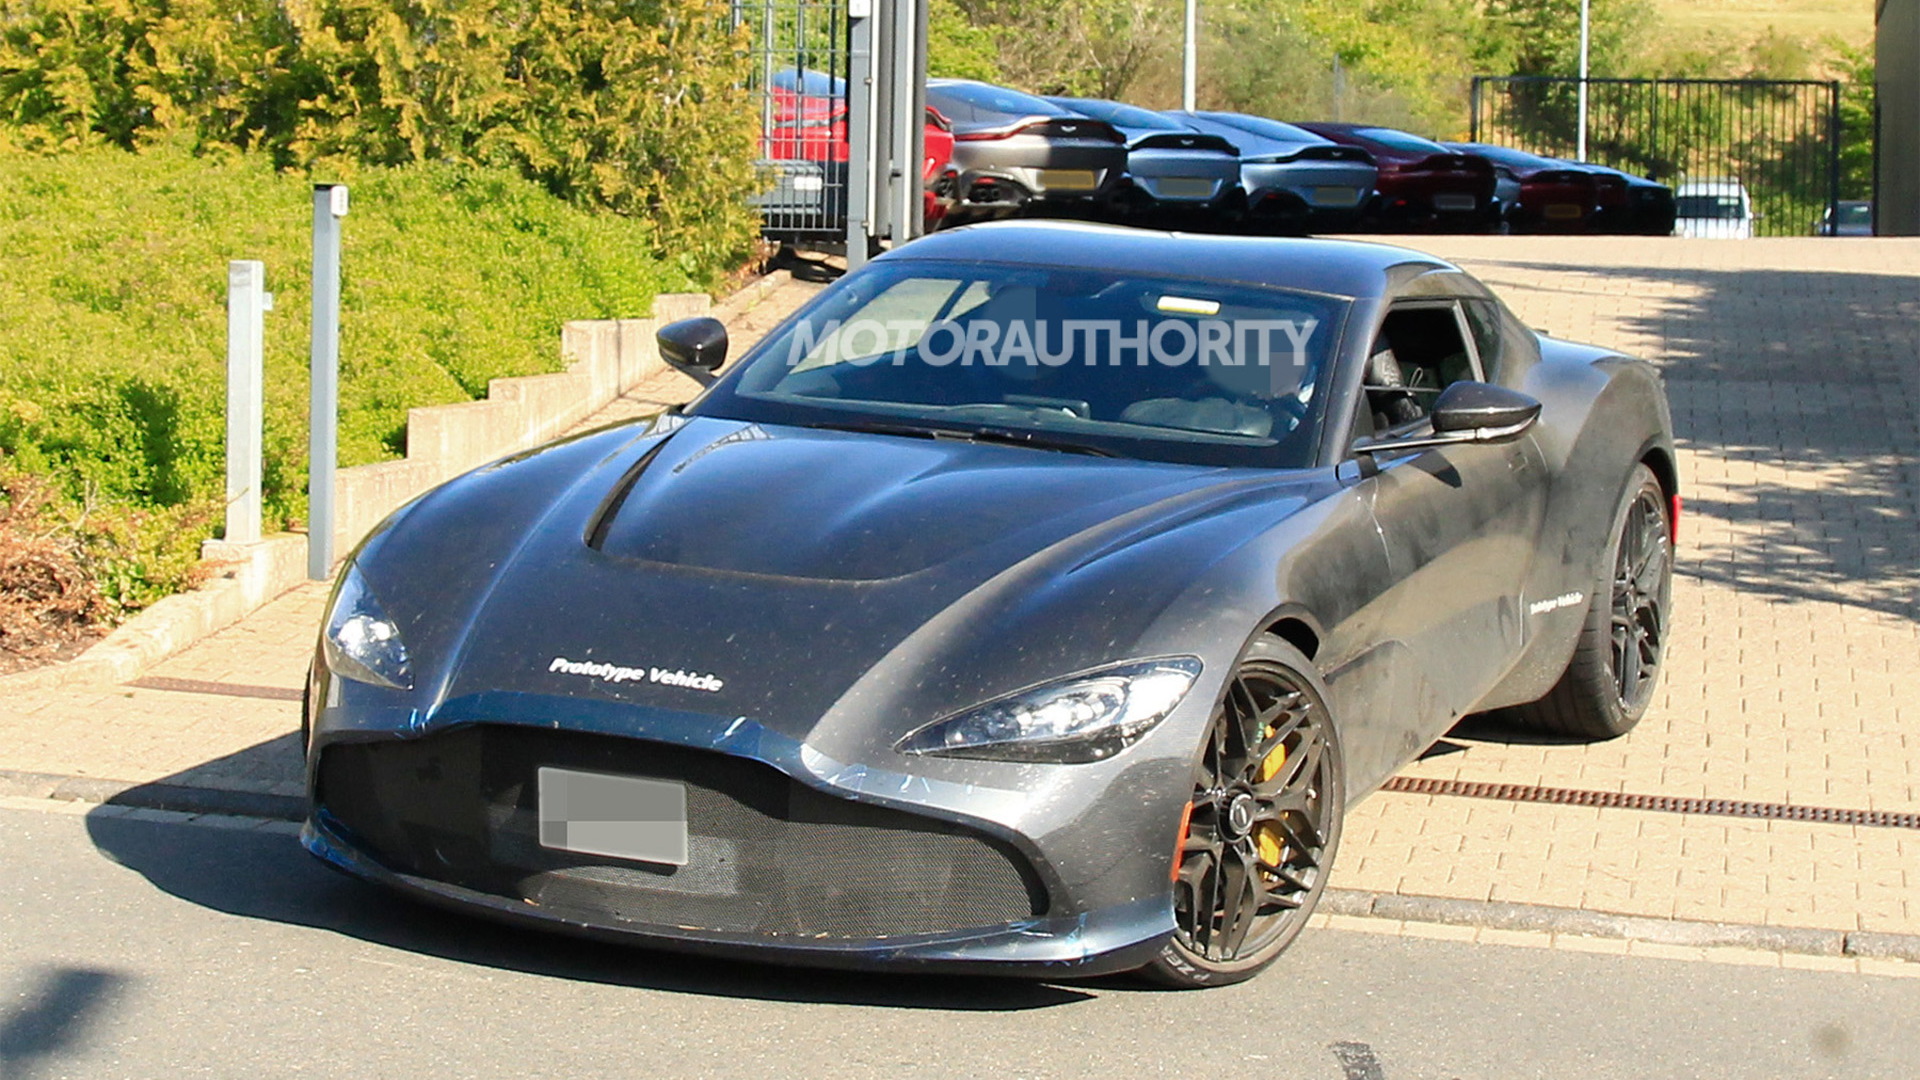 Aston Martin DBS GT Zagato spy shots - Photo credit: S. Baldauf/SB-Medien